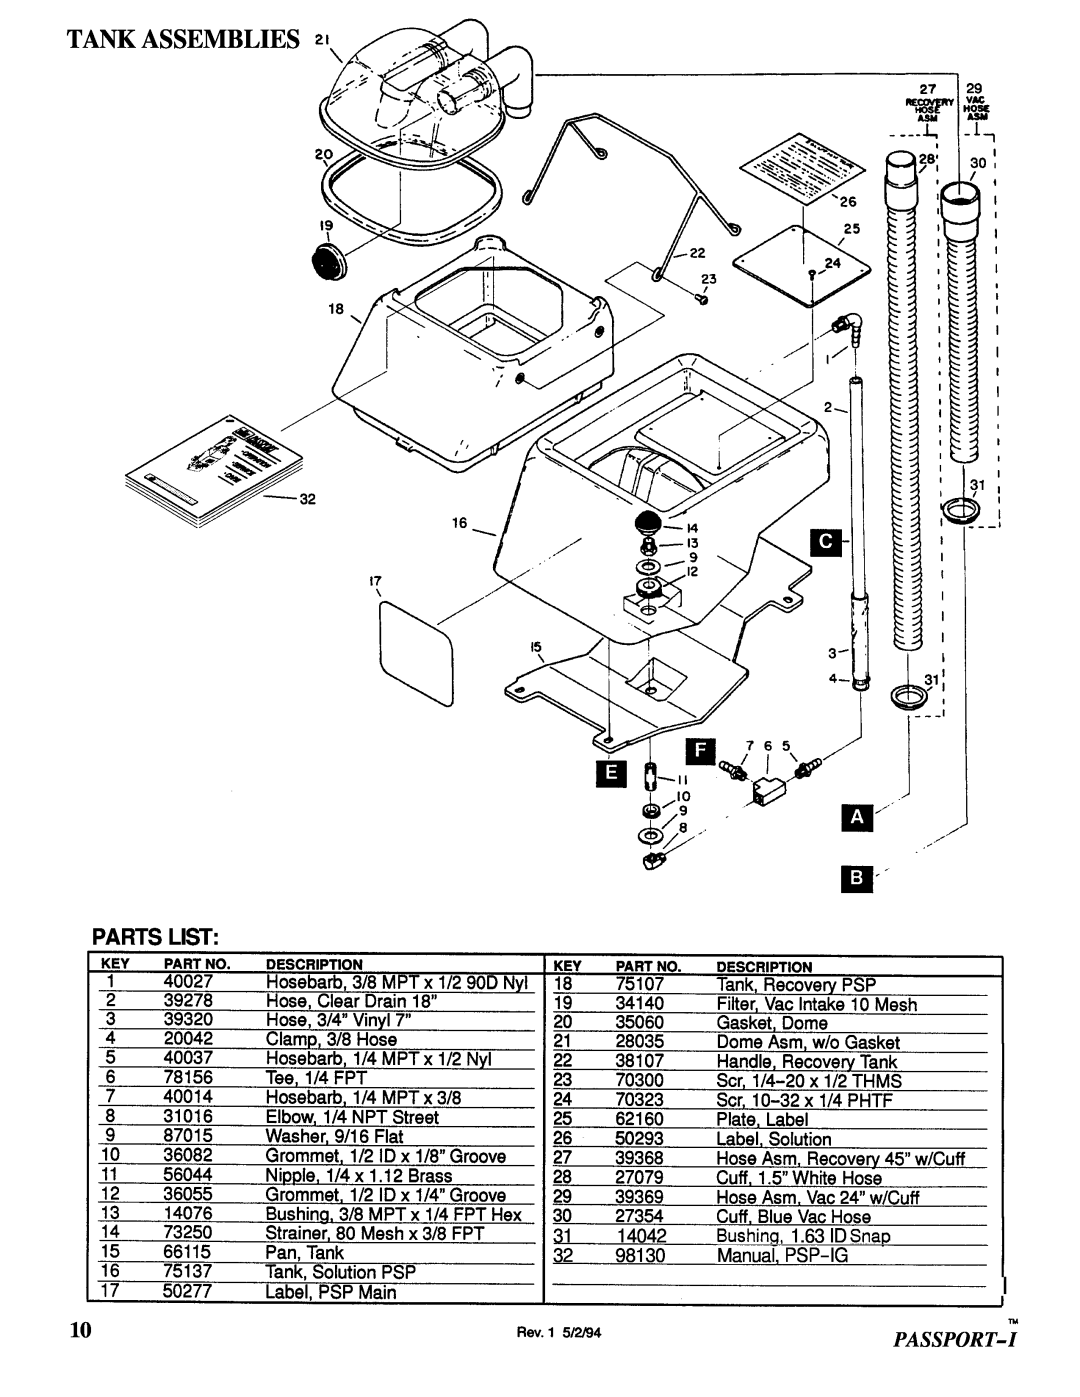 Windsor PSP-IG manual Tank Assemblies, Parts List, Passport-I, Rev.1 5/2/94 